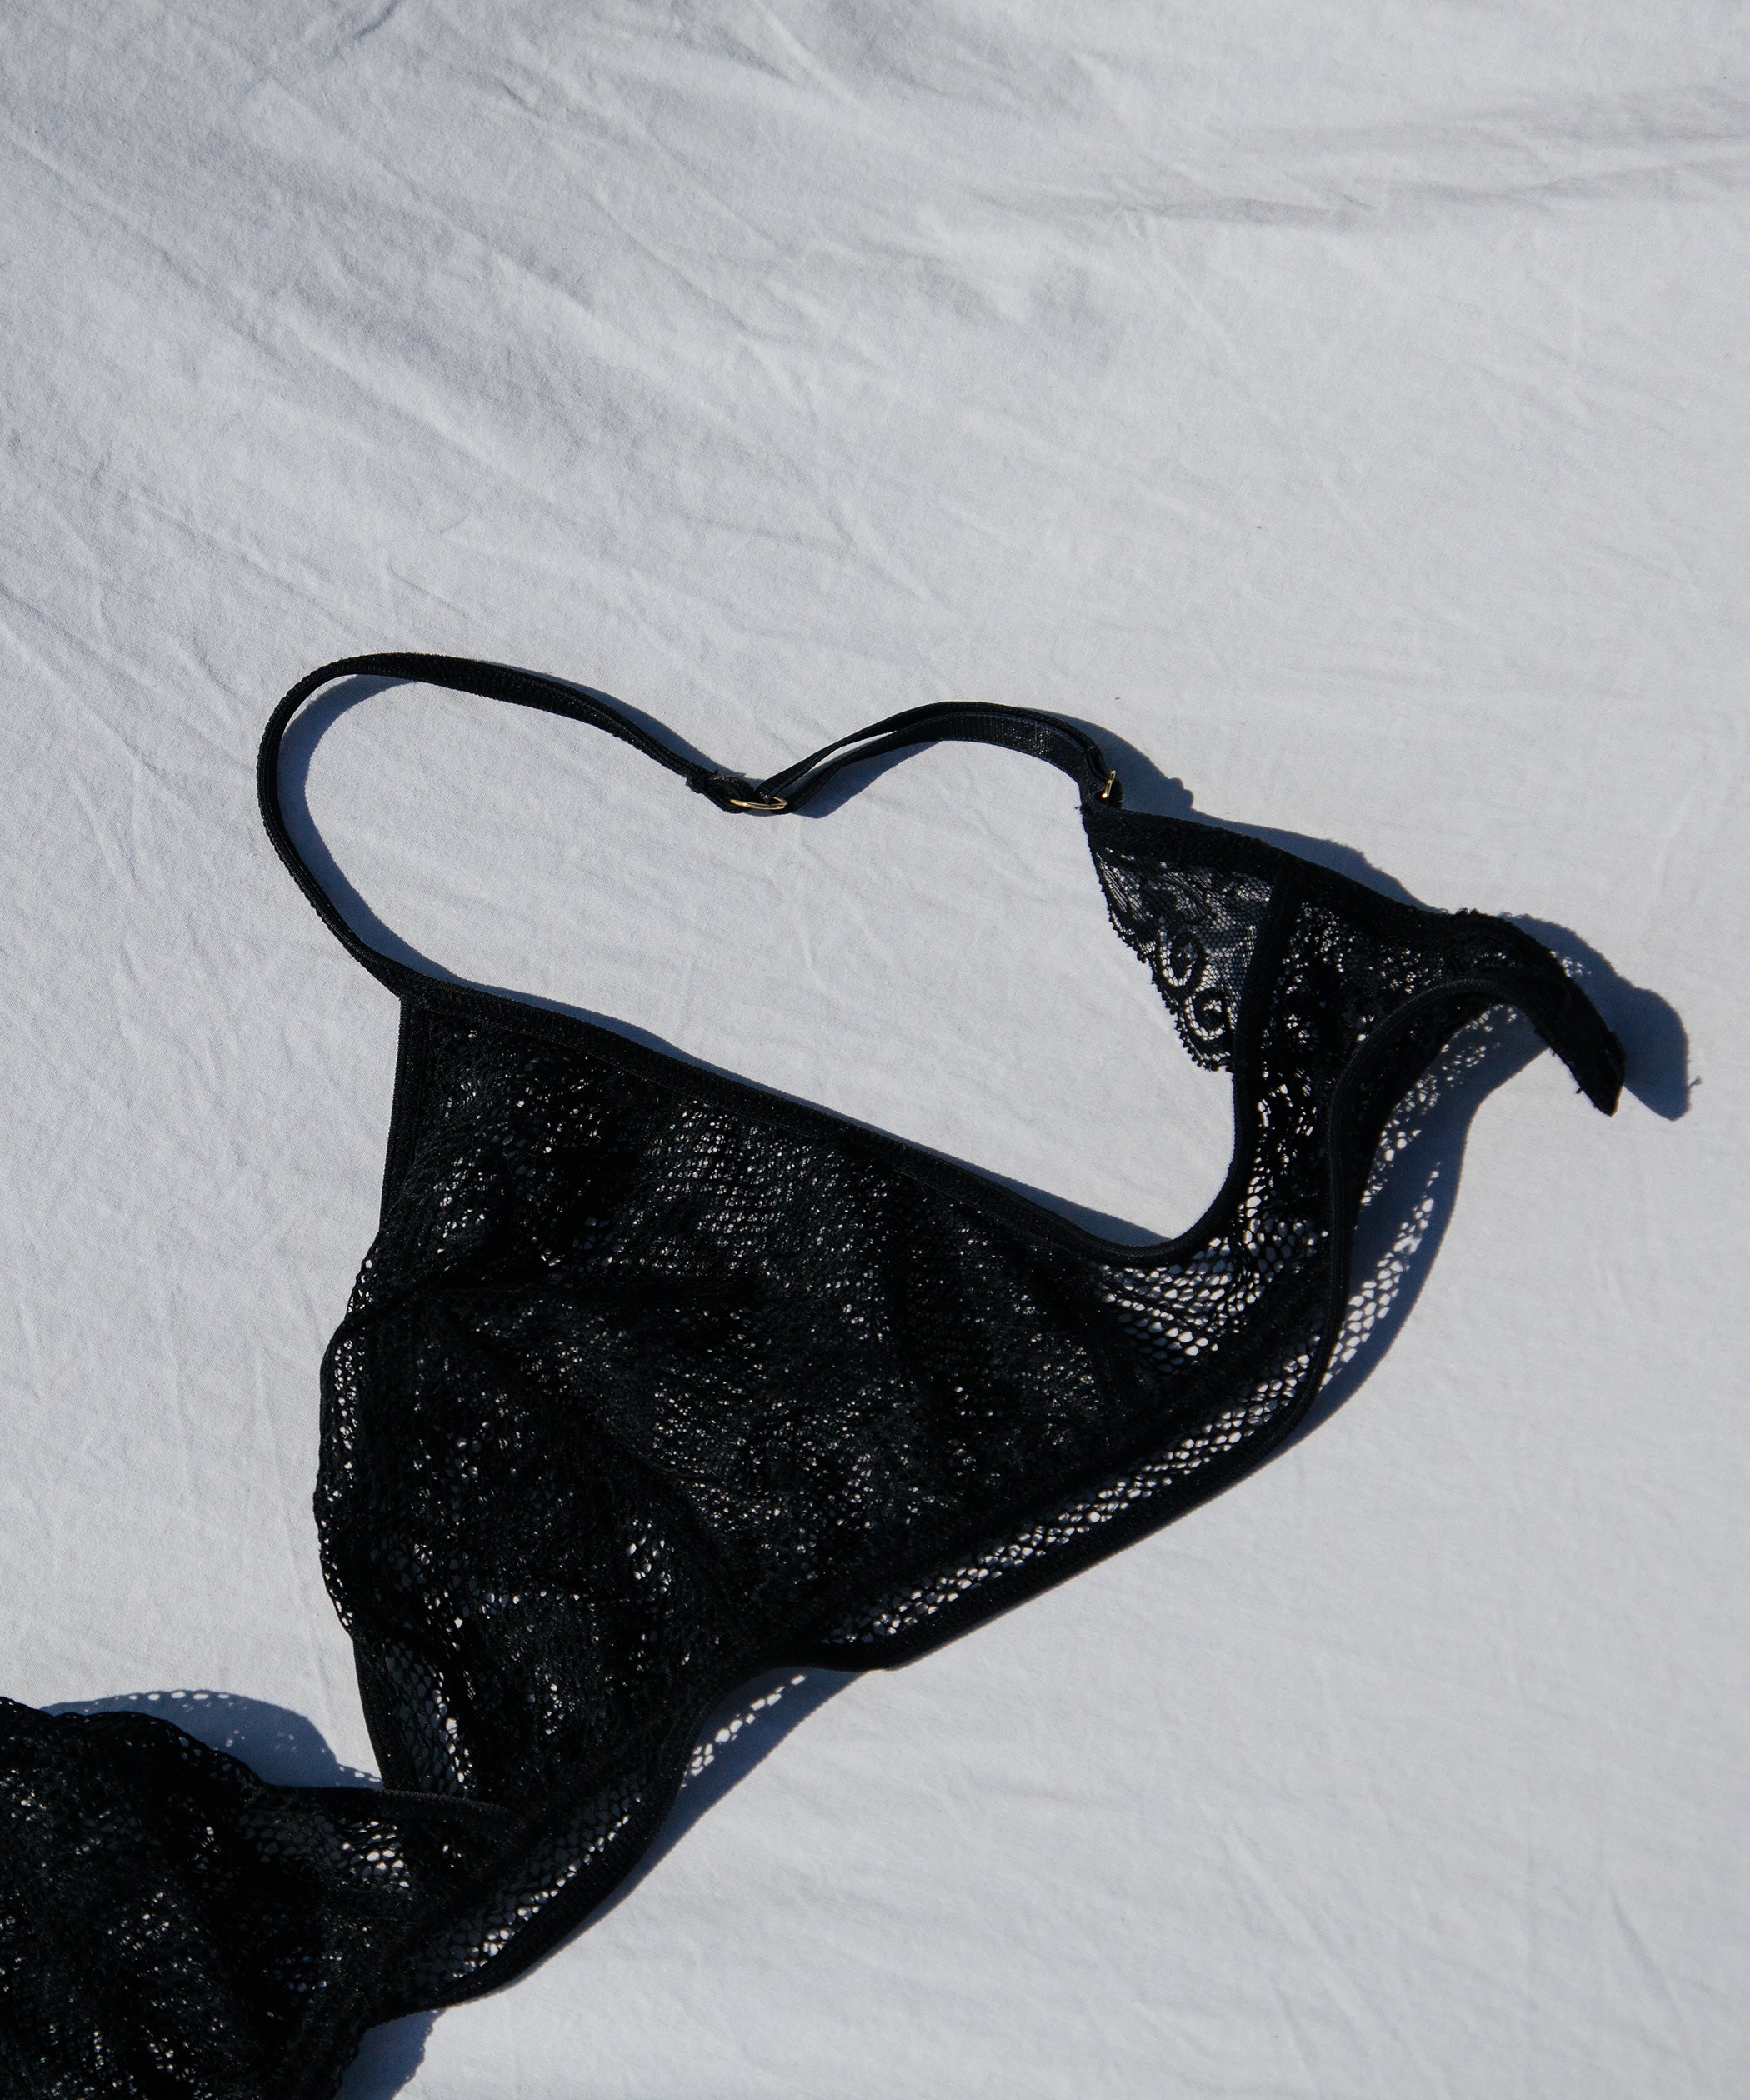 Why do men buy used women underwear? - Quora